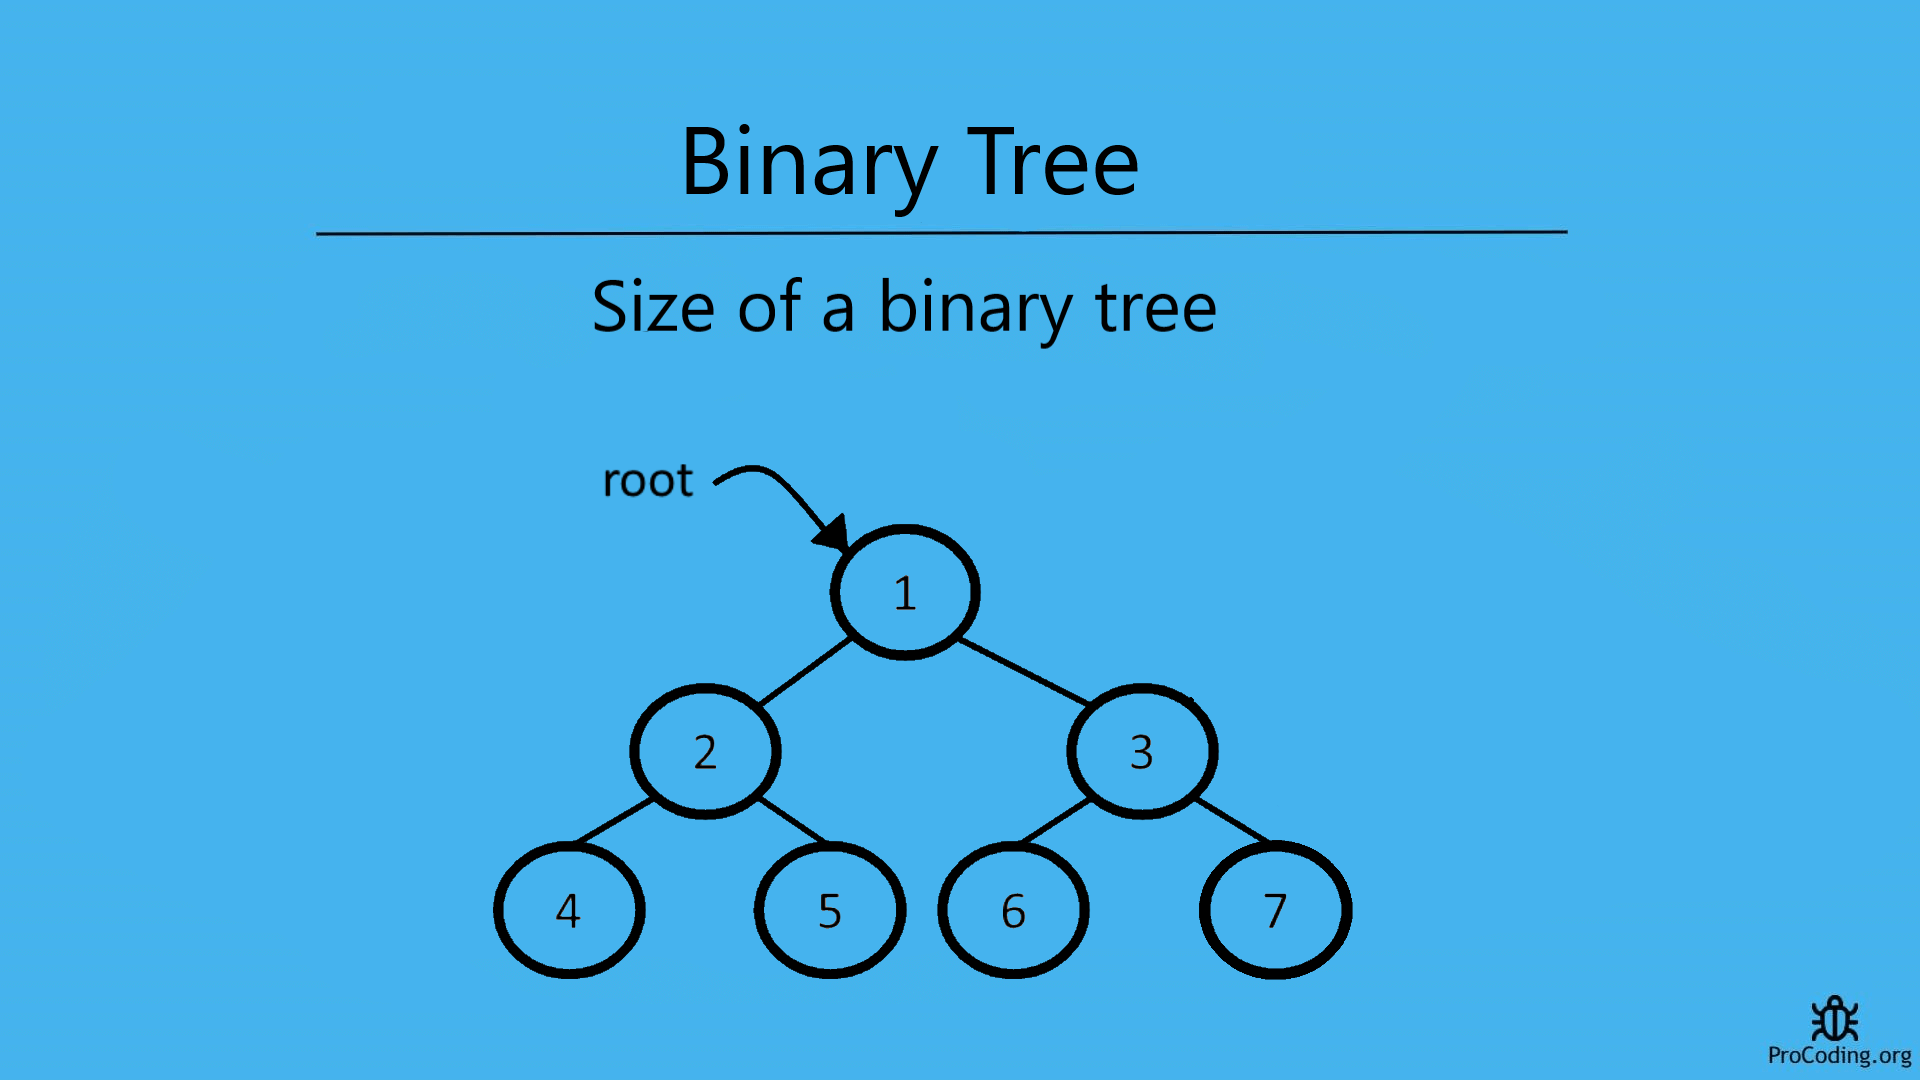 Size of a binary tree